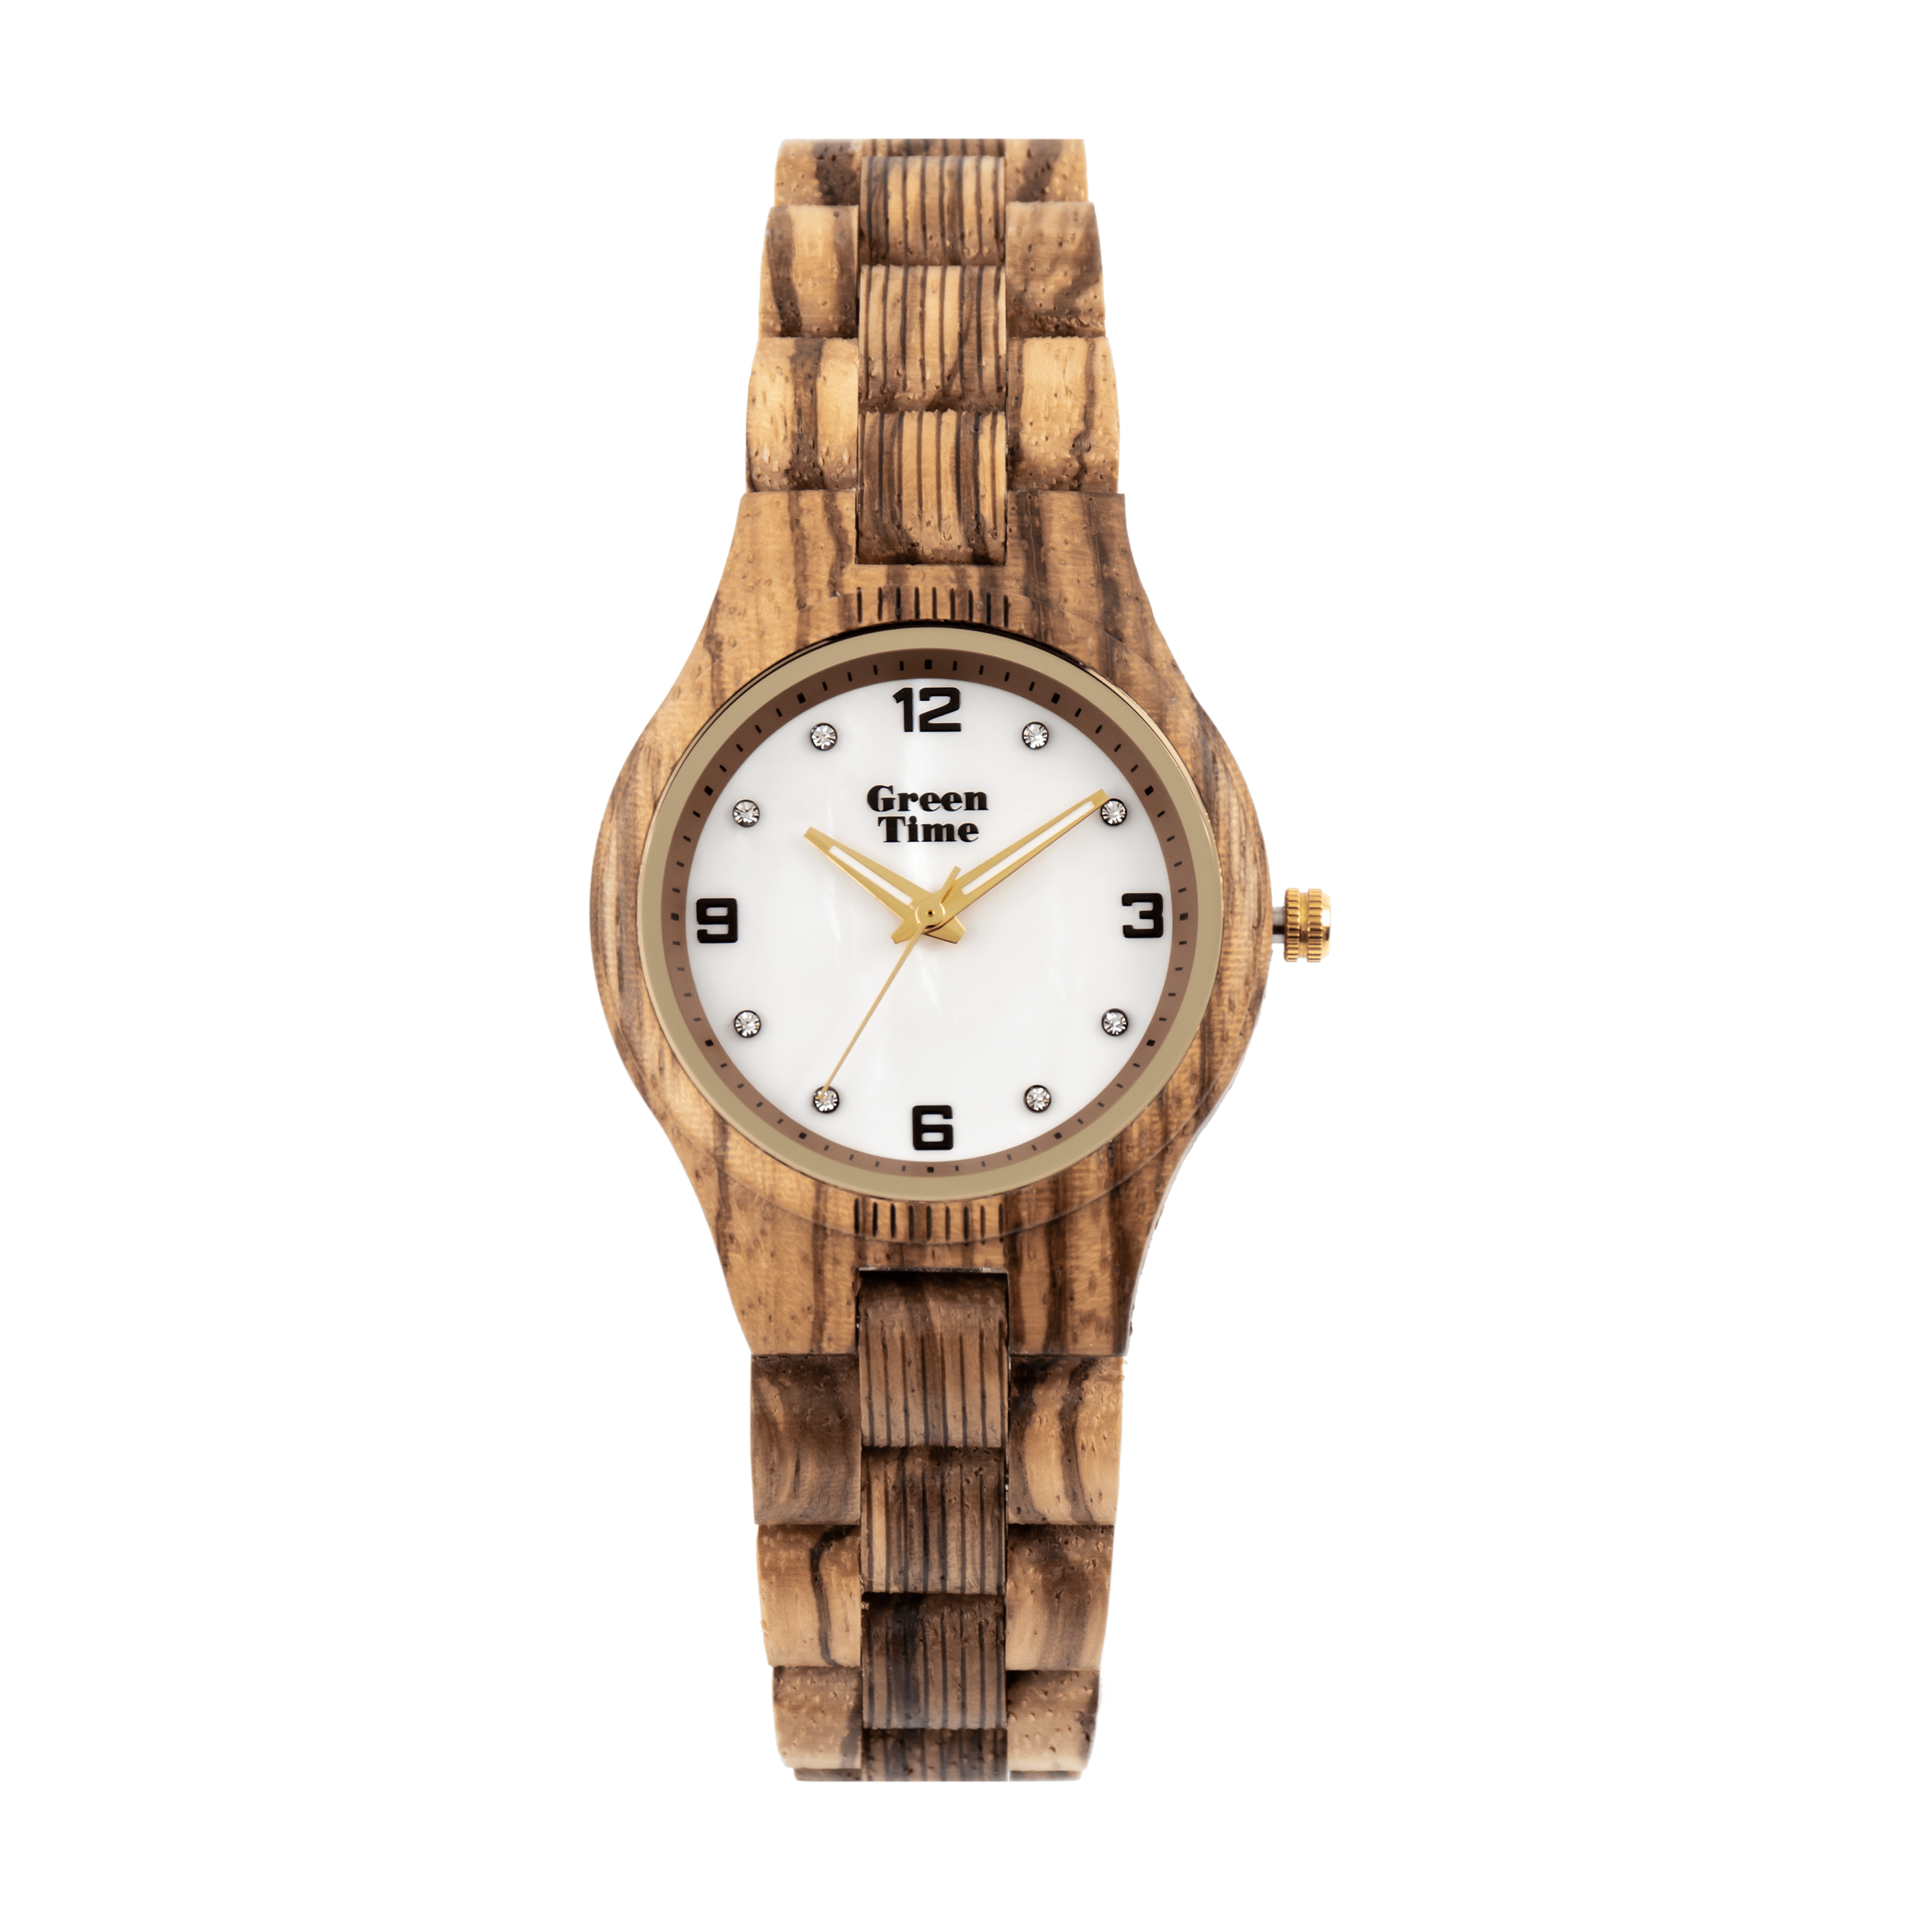 Greentime - GreenTime wood watch Wooden watch